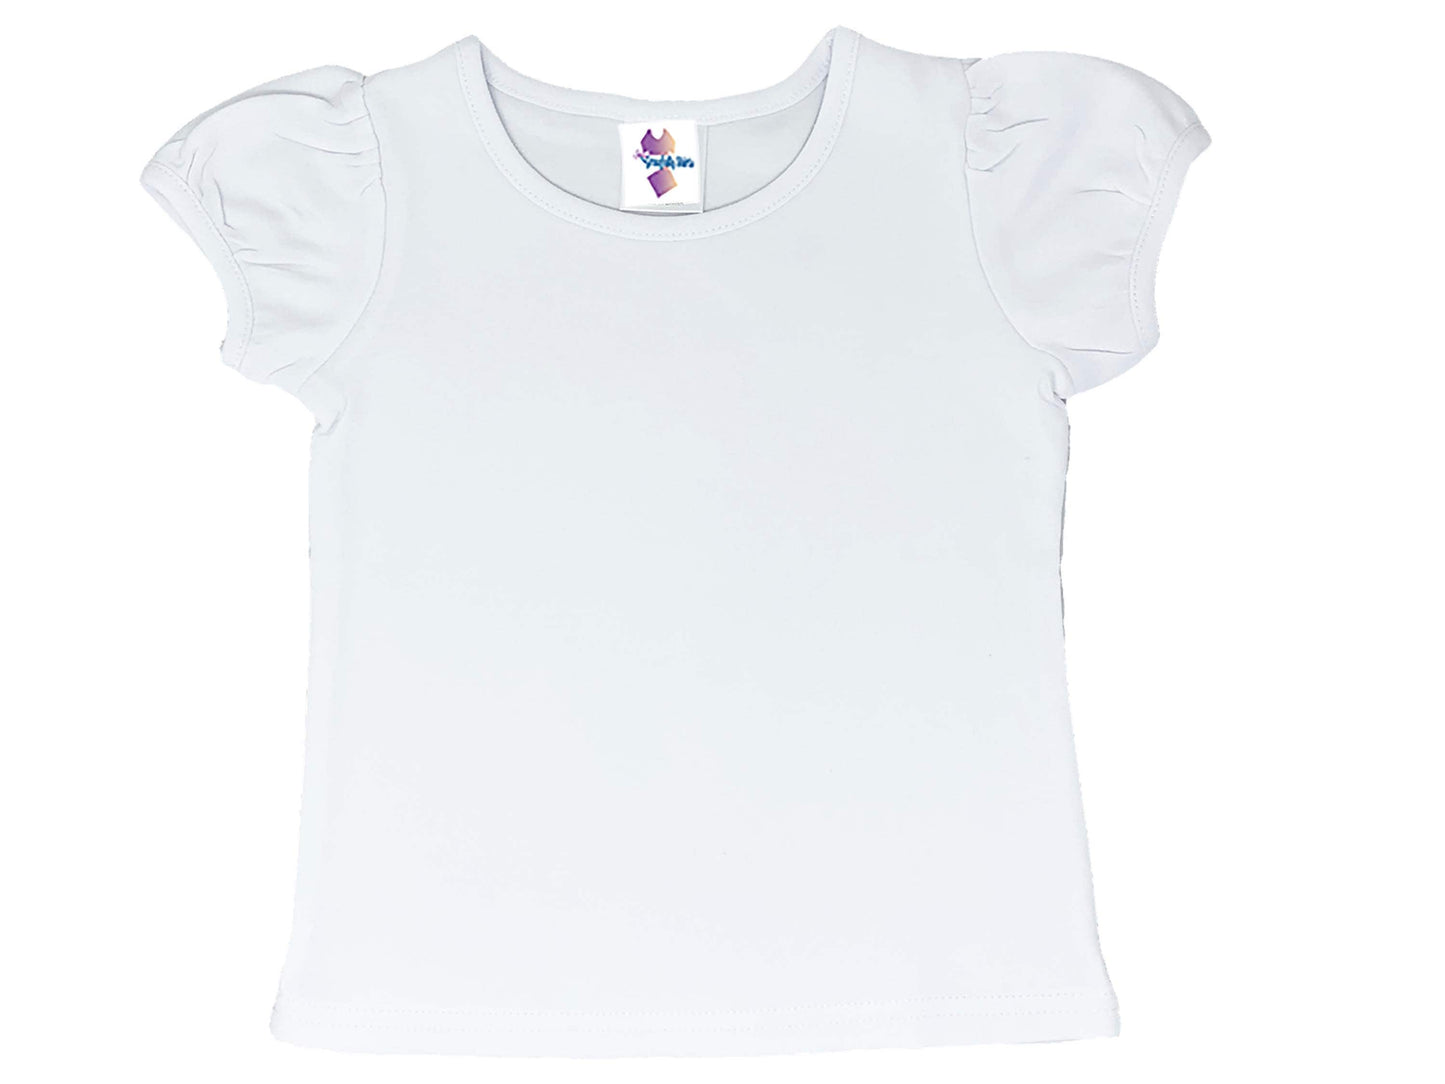 white shirtSweet One Girl Birthday Shirt, Toddler Sweet One Shirt, Girls Shirts, 